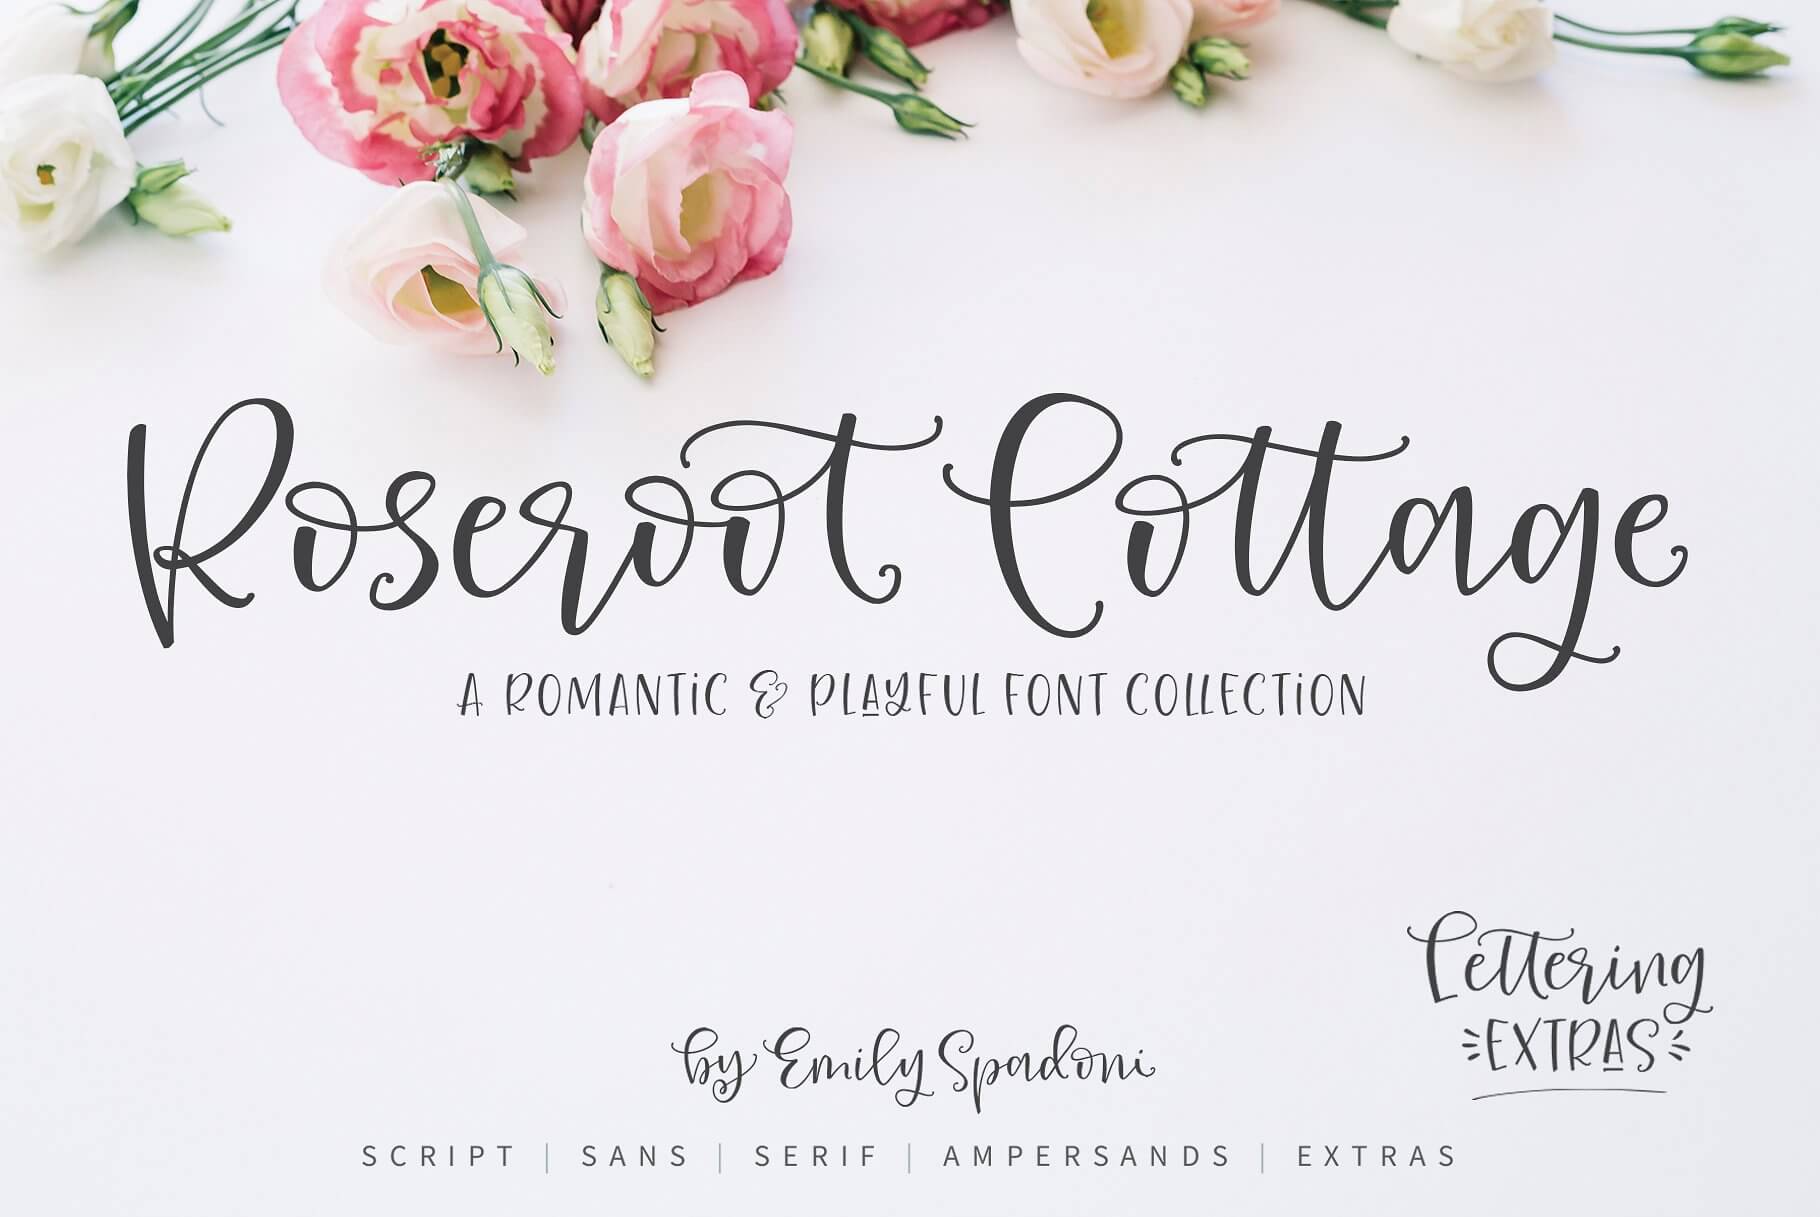 Roseroot Cottage - playful romantic hand lettering font